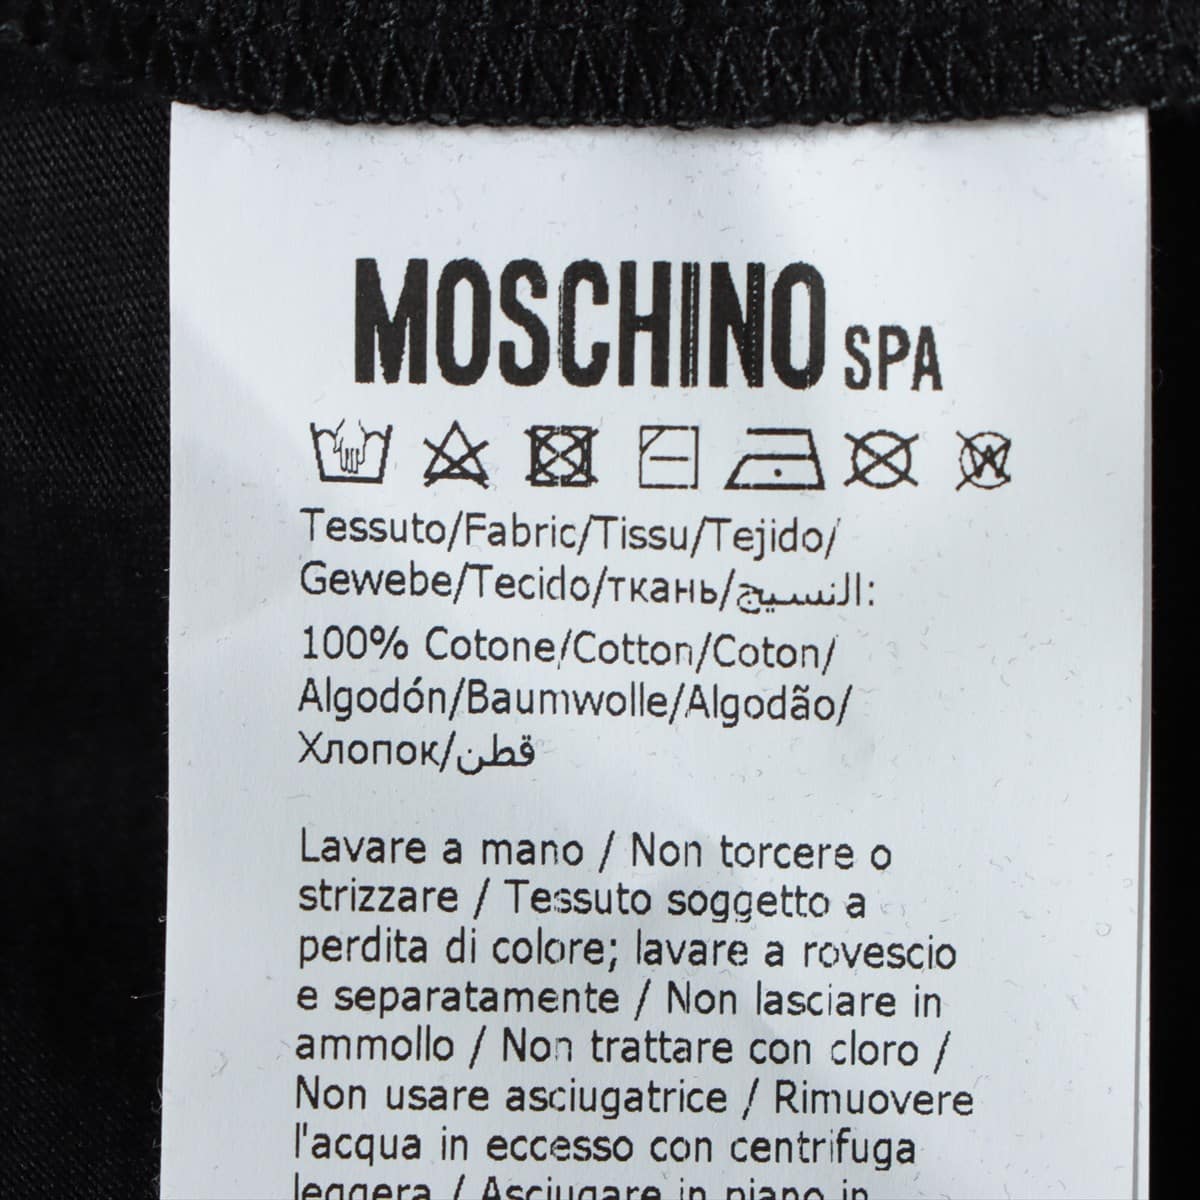 Moschino 20SS Cotton T-shirt I 50 Men's Black  peace button logo